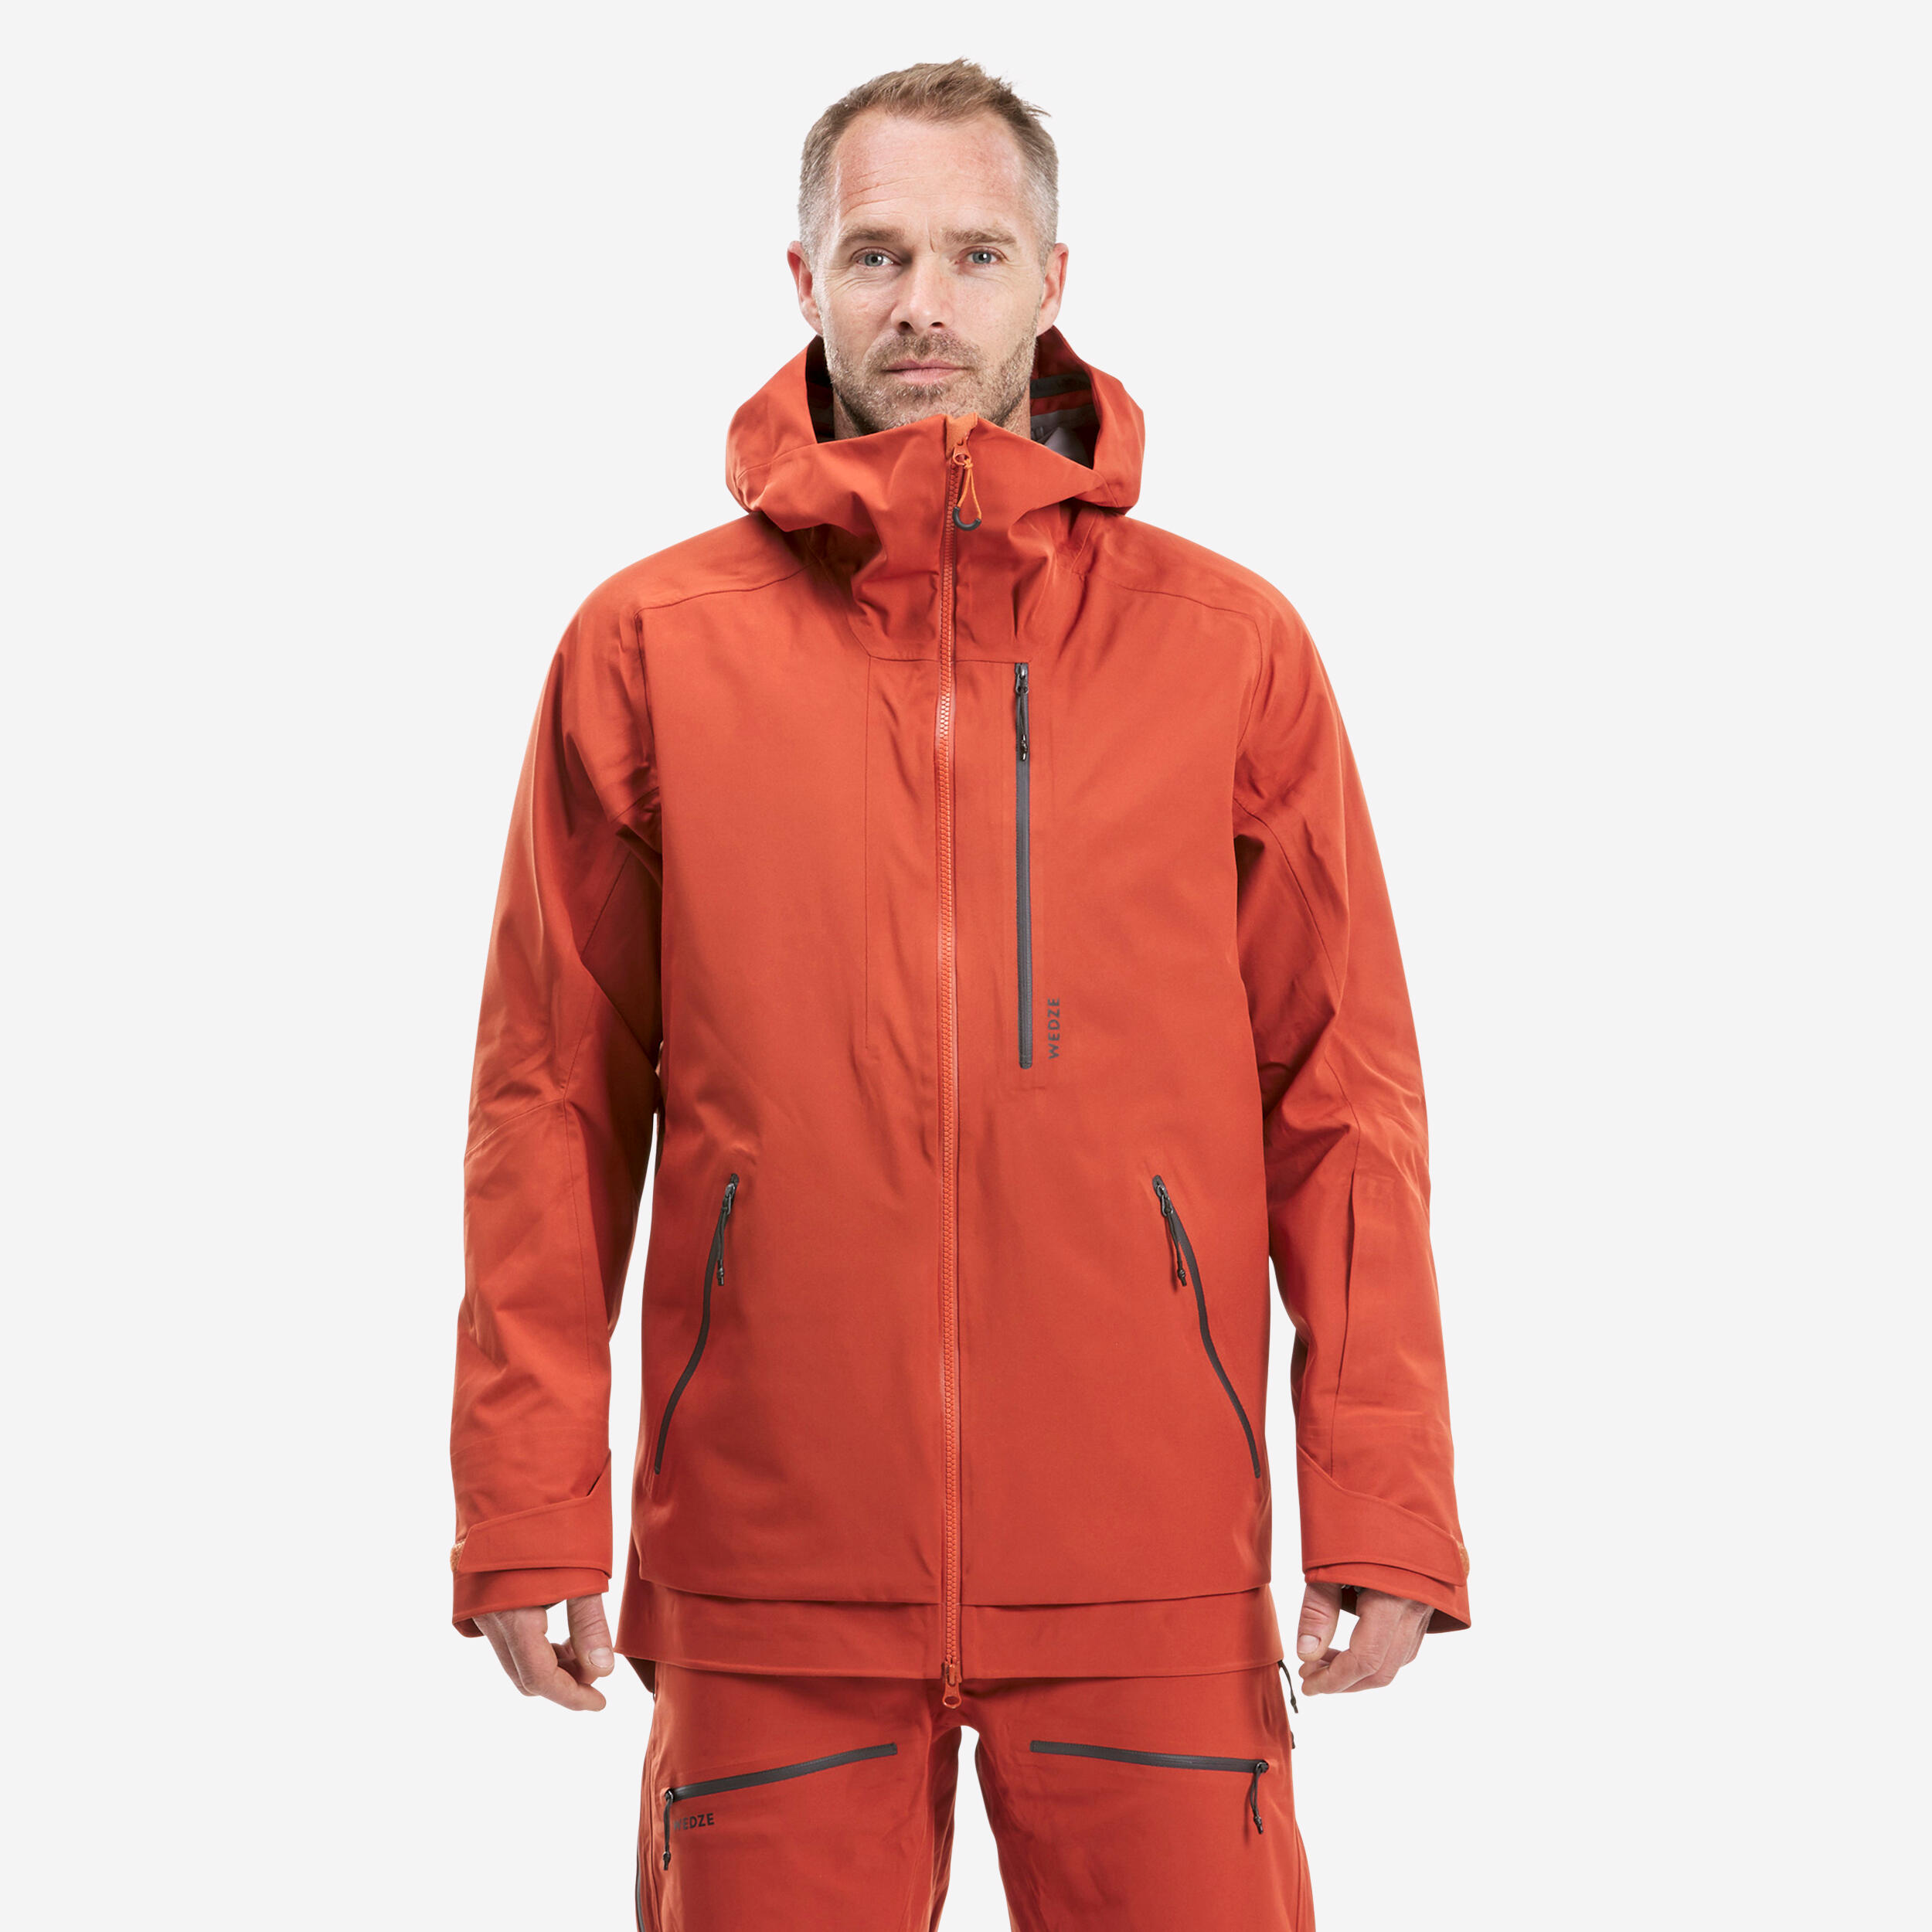 WEDZE Men's Ski Jacket - FR500 - Terracotta